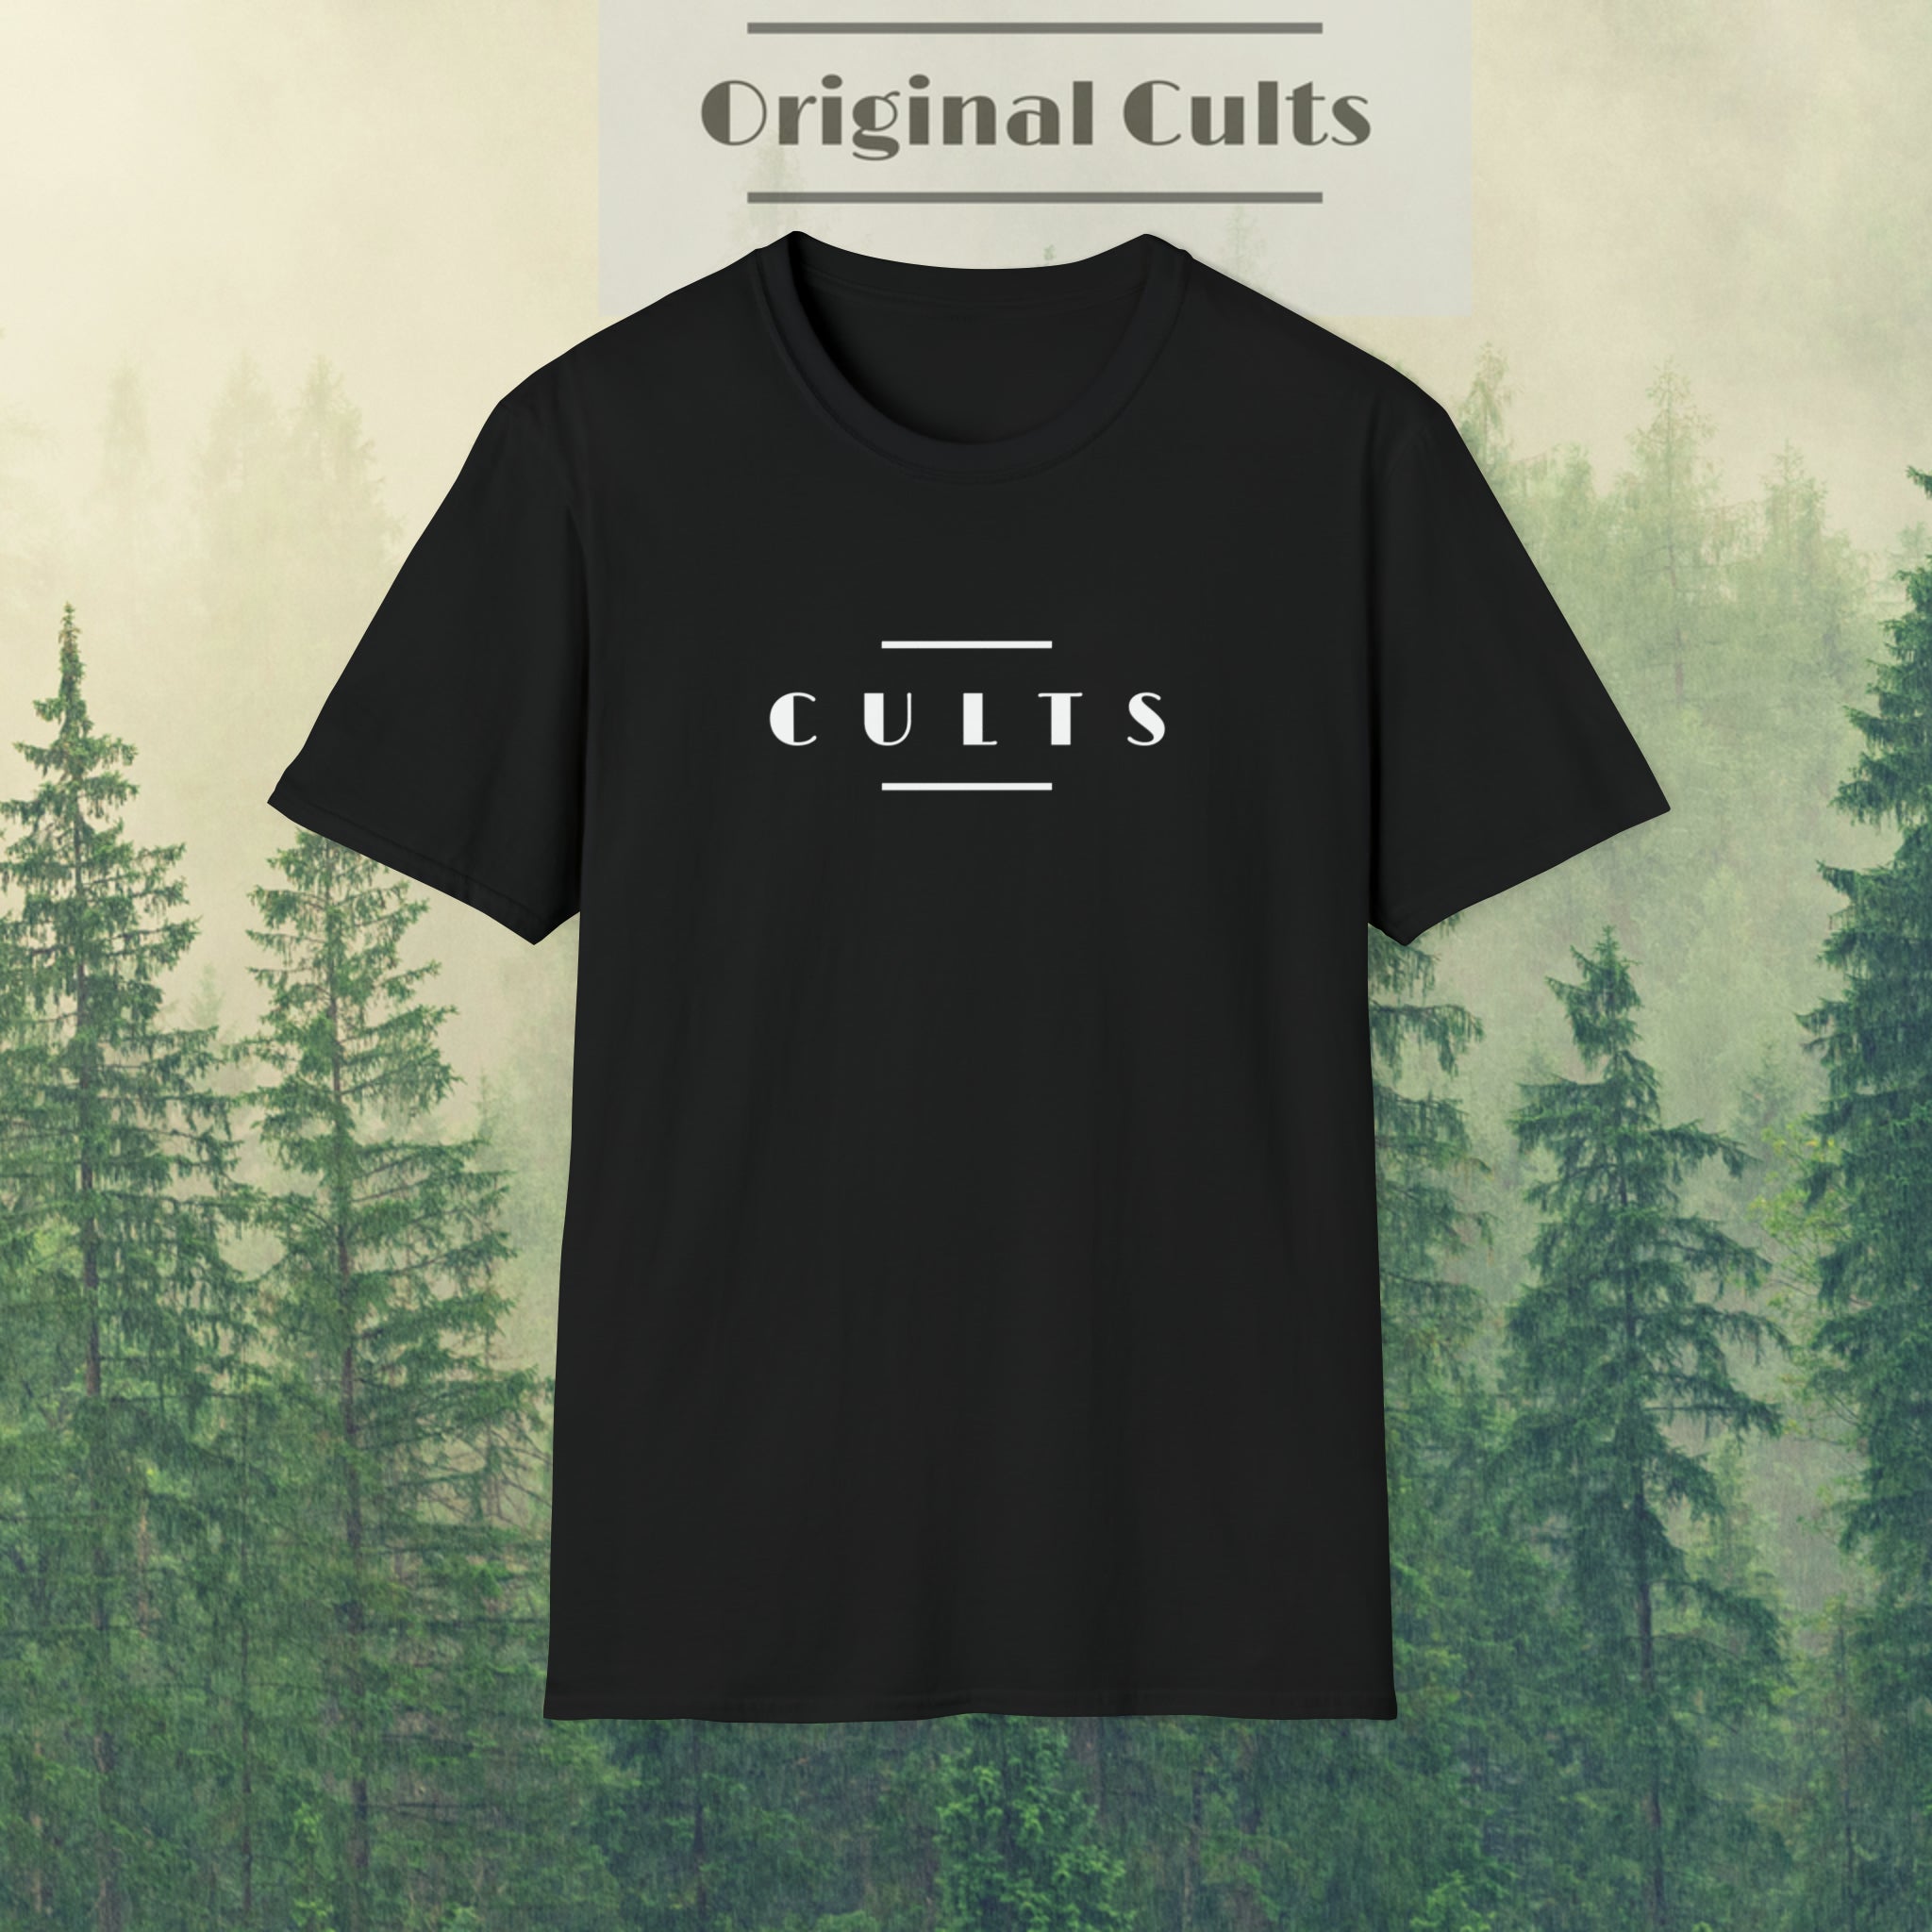 Cults Clothing - Original